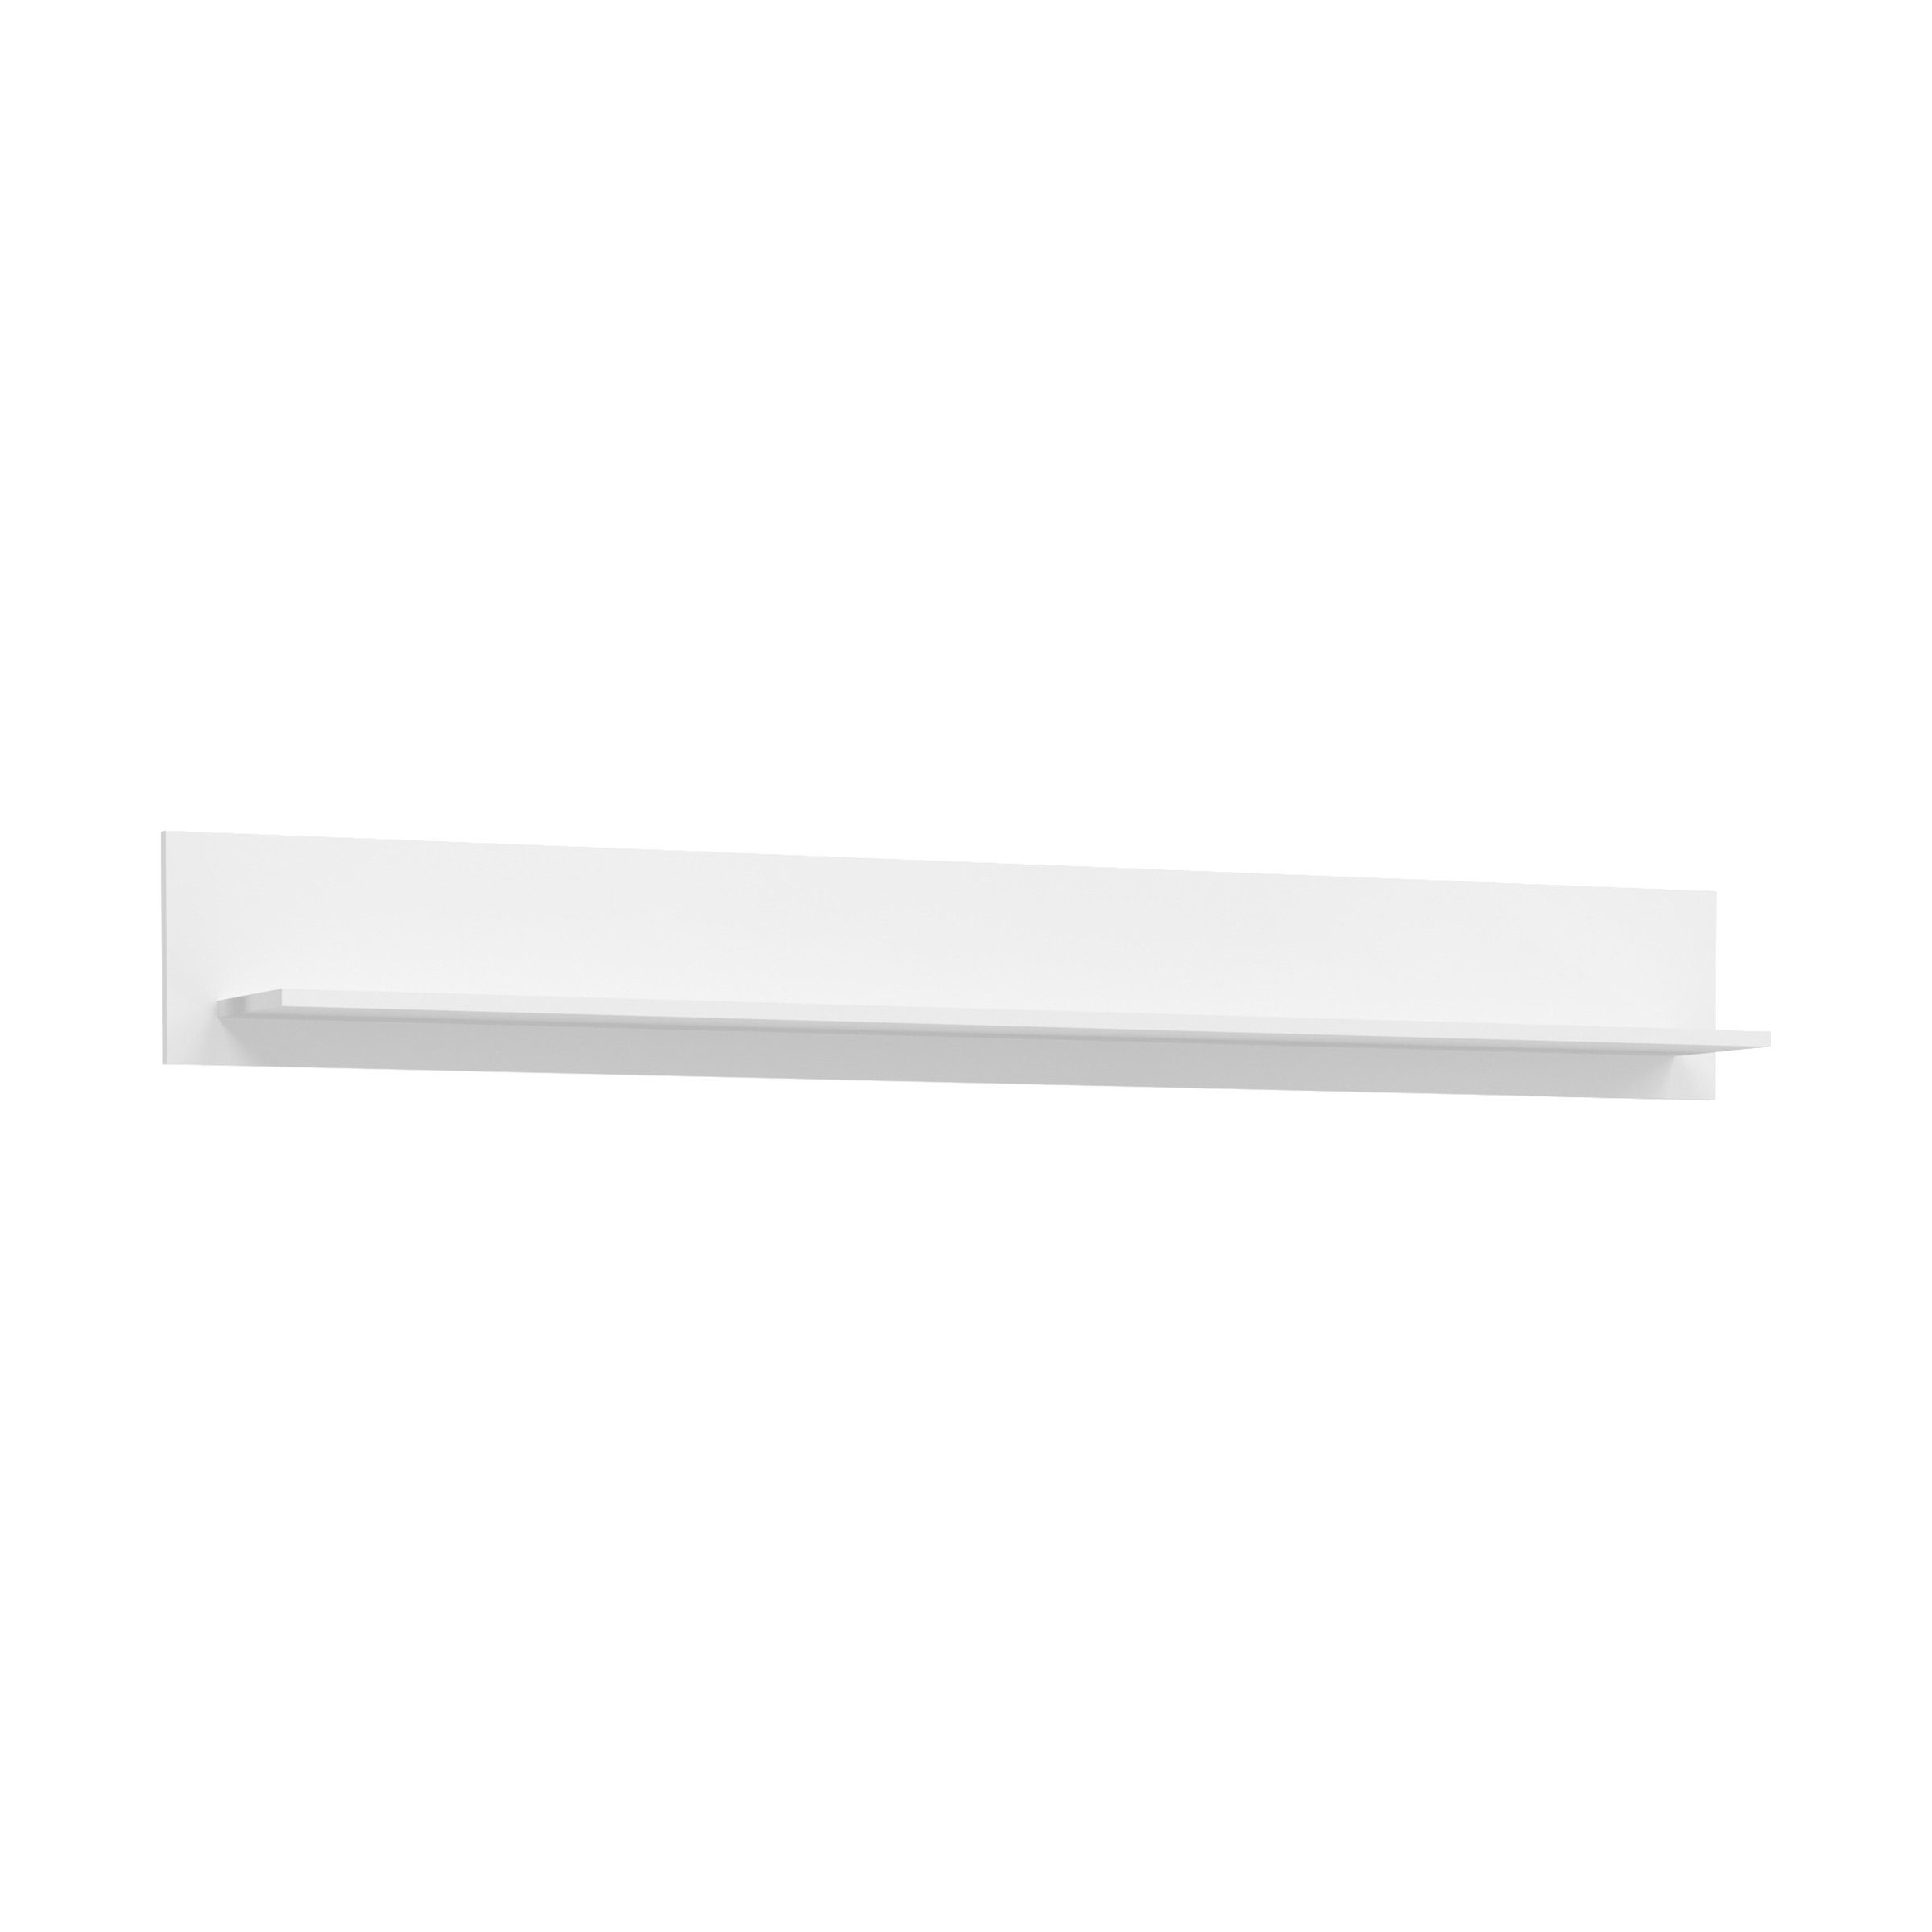 möbelando Wandboard Skylight, BxHxT: 170x22x21 cm, in weiß/weiß hochglanz